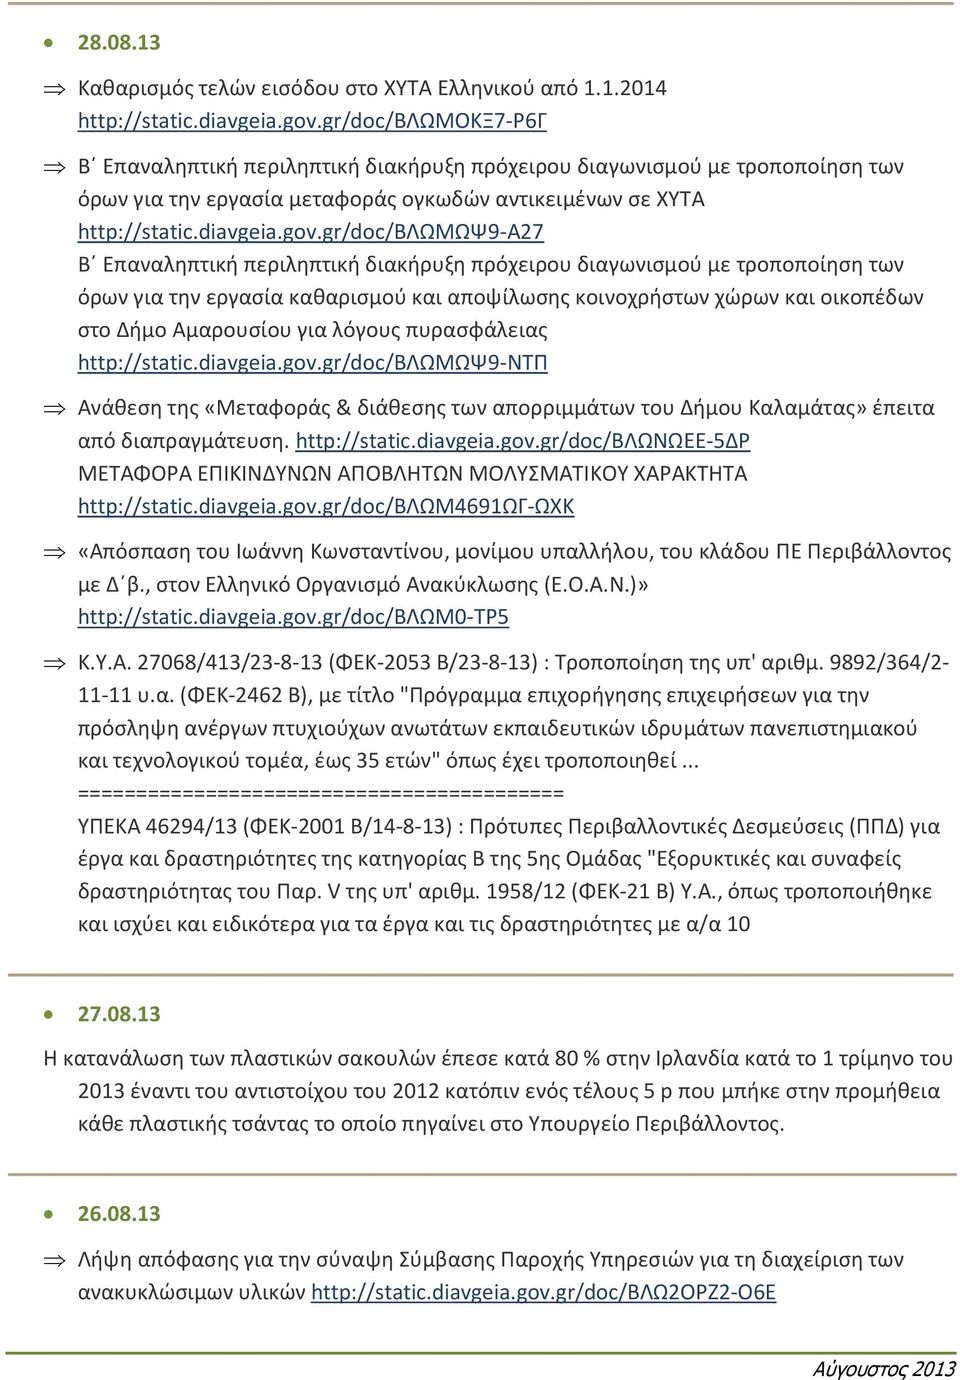 gr/doc/βλωμωψ9-α27 Β Επαναληπτική περιληπτική διακήρυξη πρόχειρου διαγωνισμού με τροποποίηση των όρων για την εργασία καθαρισμού και αποψίλωσης κοινοχρήστων χώρων και οικοπέδων στο Δήμο Αμαρουσίου